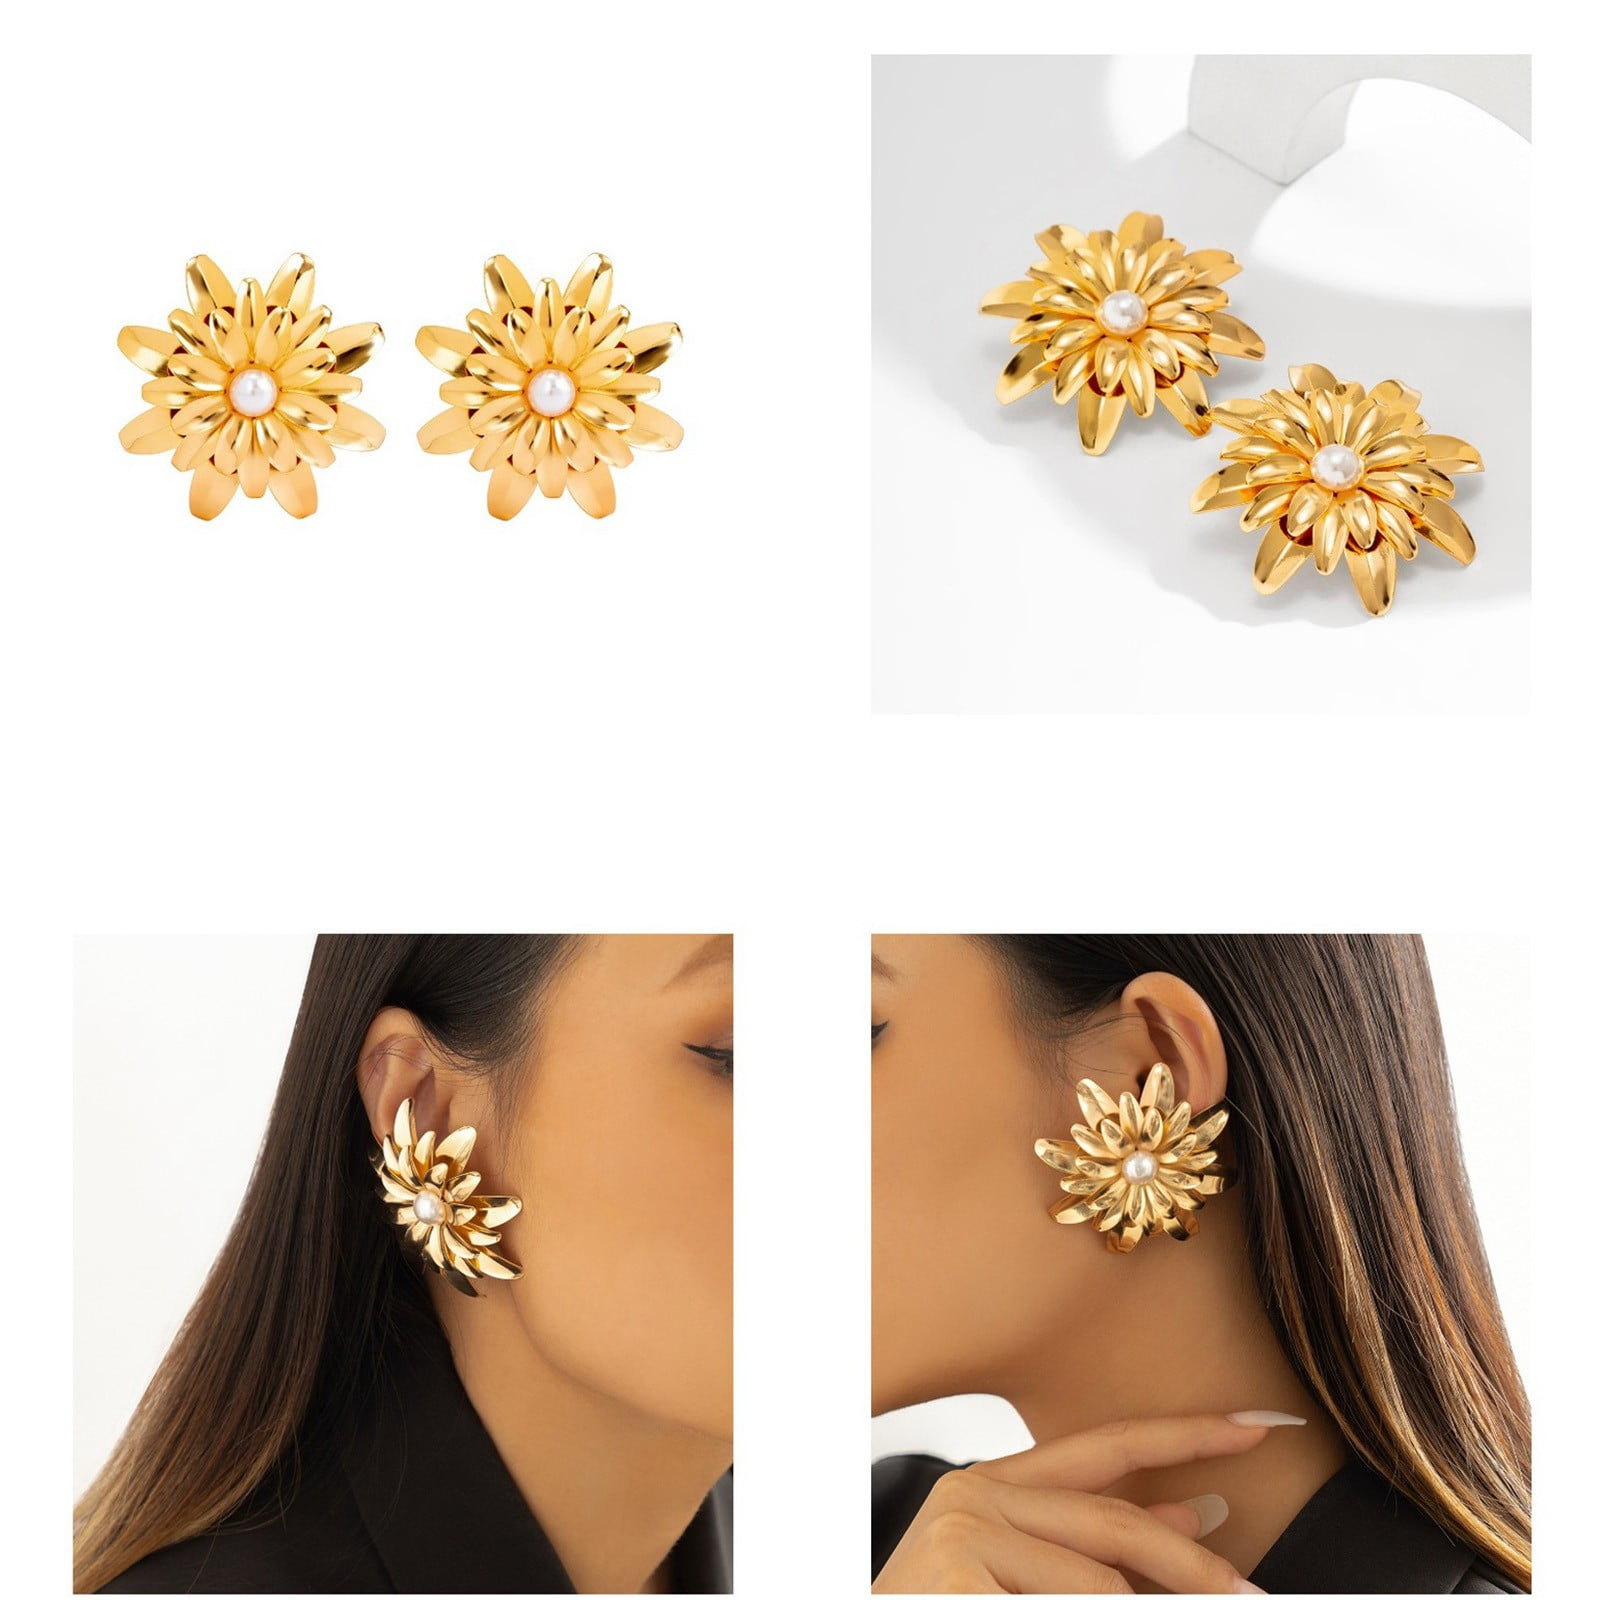 Flower Earrings for party wedding haldi Earrings – Hello Cosmos